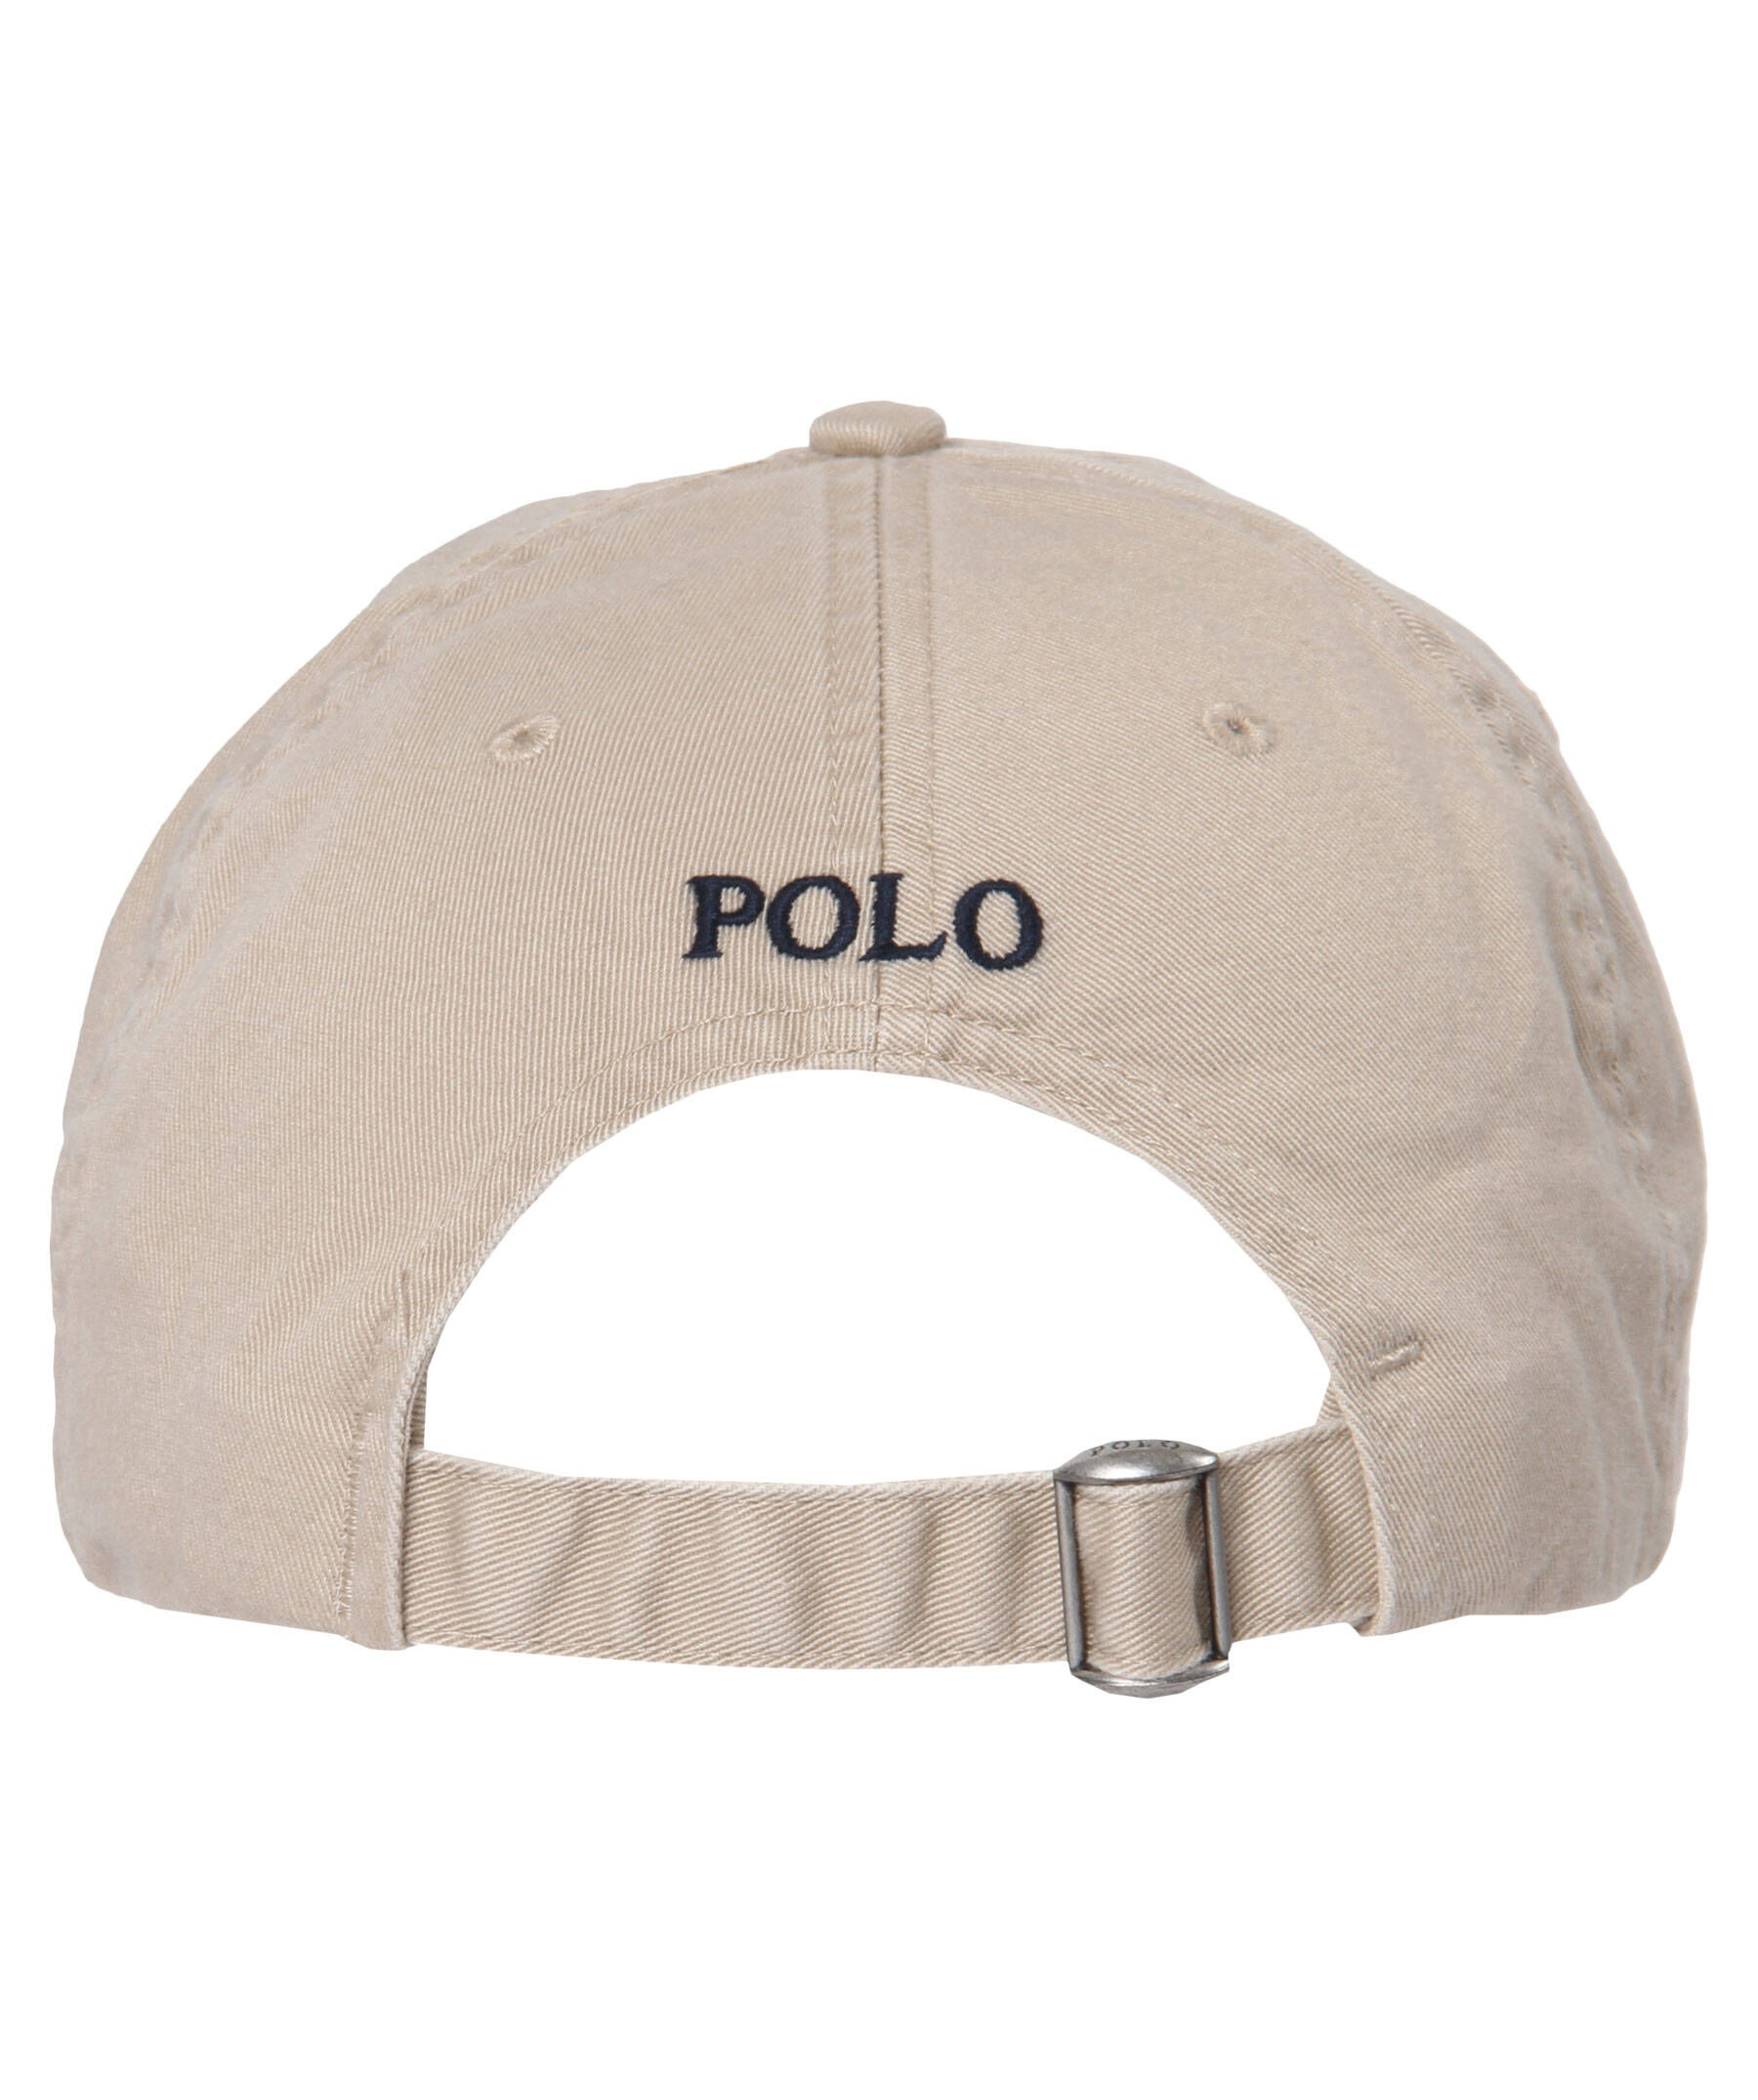 Polo Ralph Lauren Damen und Herren Basecap CLASSIC SPORT CAP kaufen engelhorn